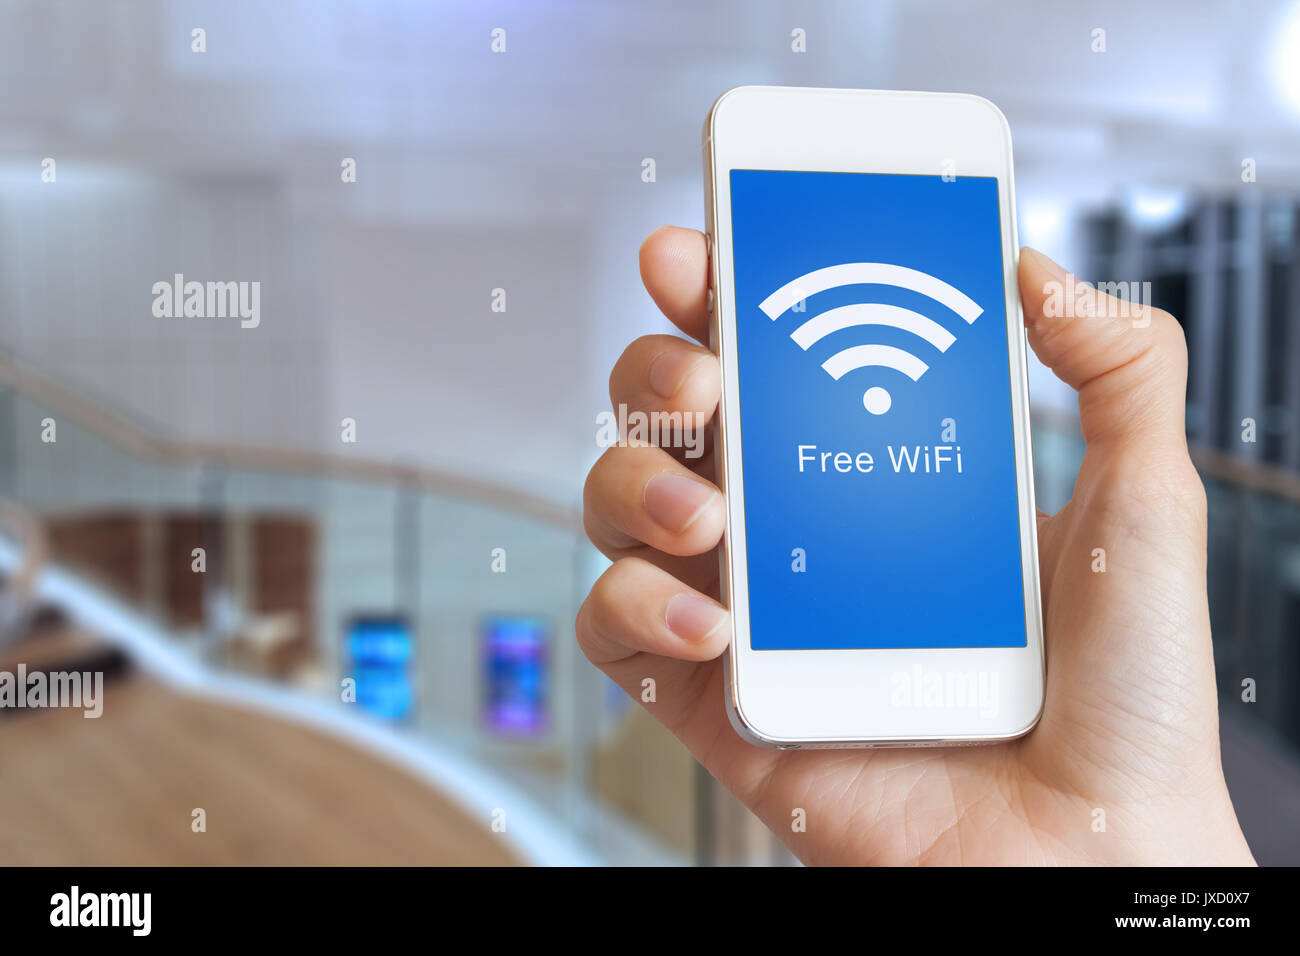 Close-up de mano sujetando smartphone con WiFi hotspot gratis icono en la pantalla para conectarse a internet inalámbrico, interiores de edificios públicos en segundo plano. Foto de stock